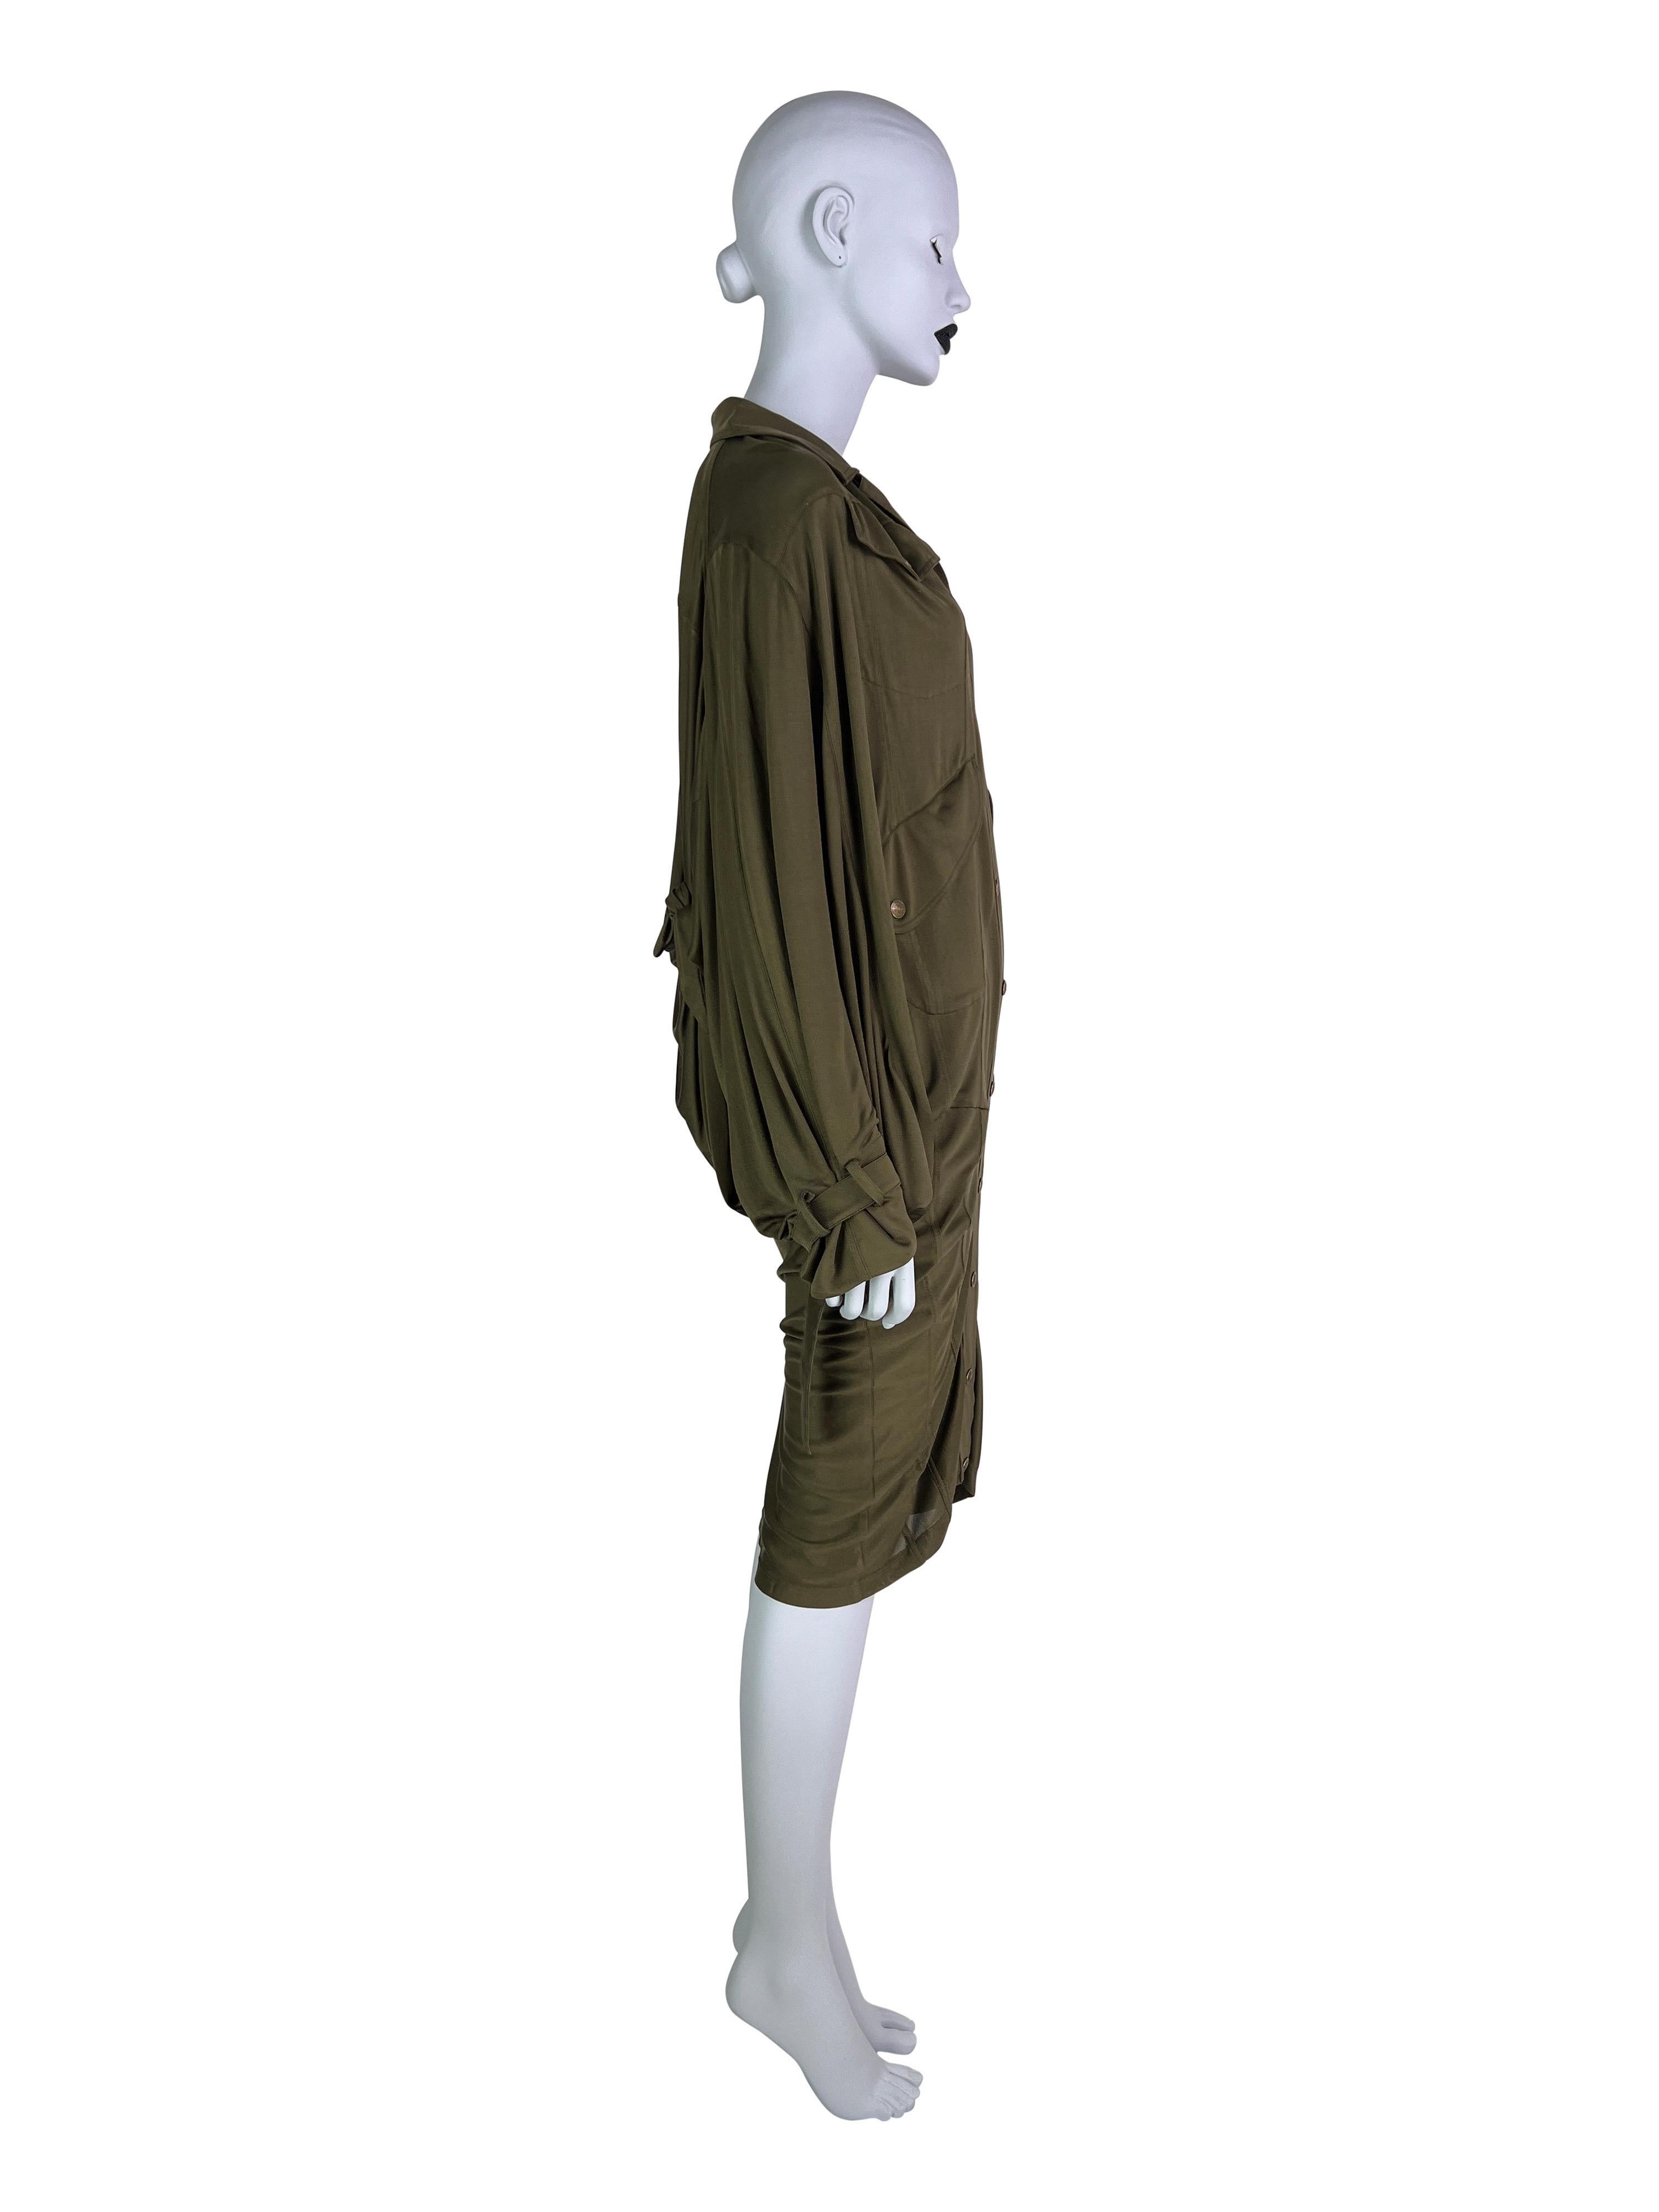 SS 2003 Dior by John Galliano RTW Silk Dress For Sale 3